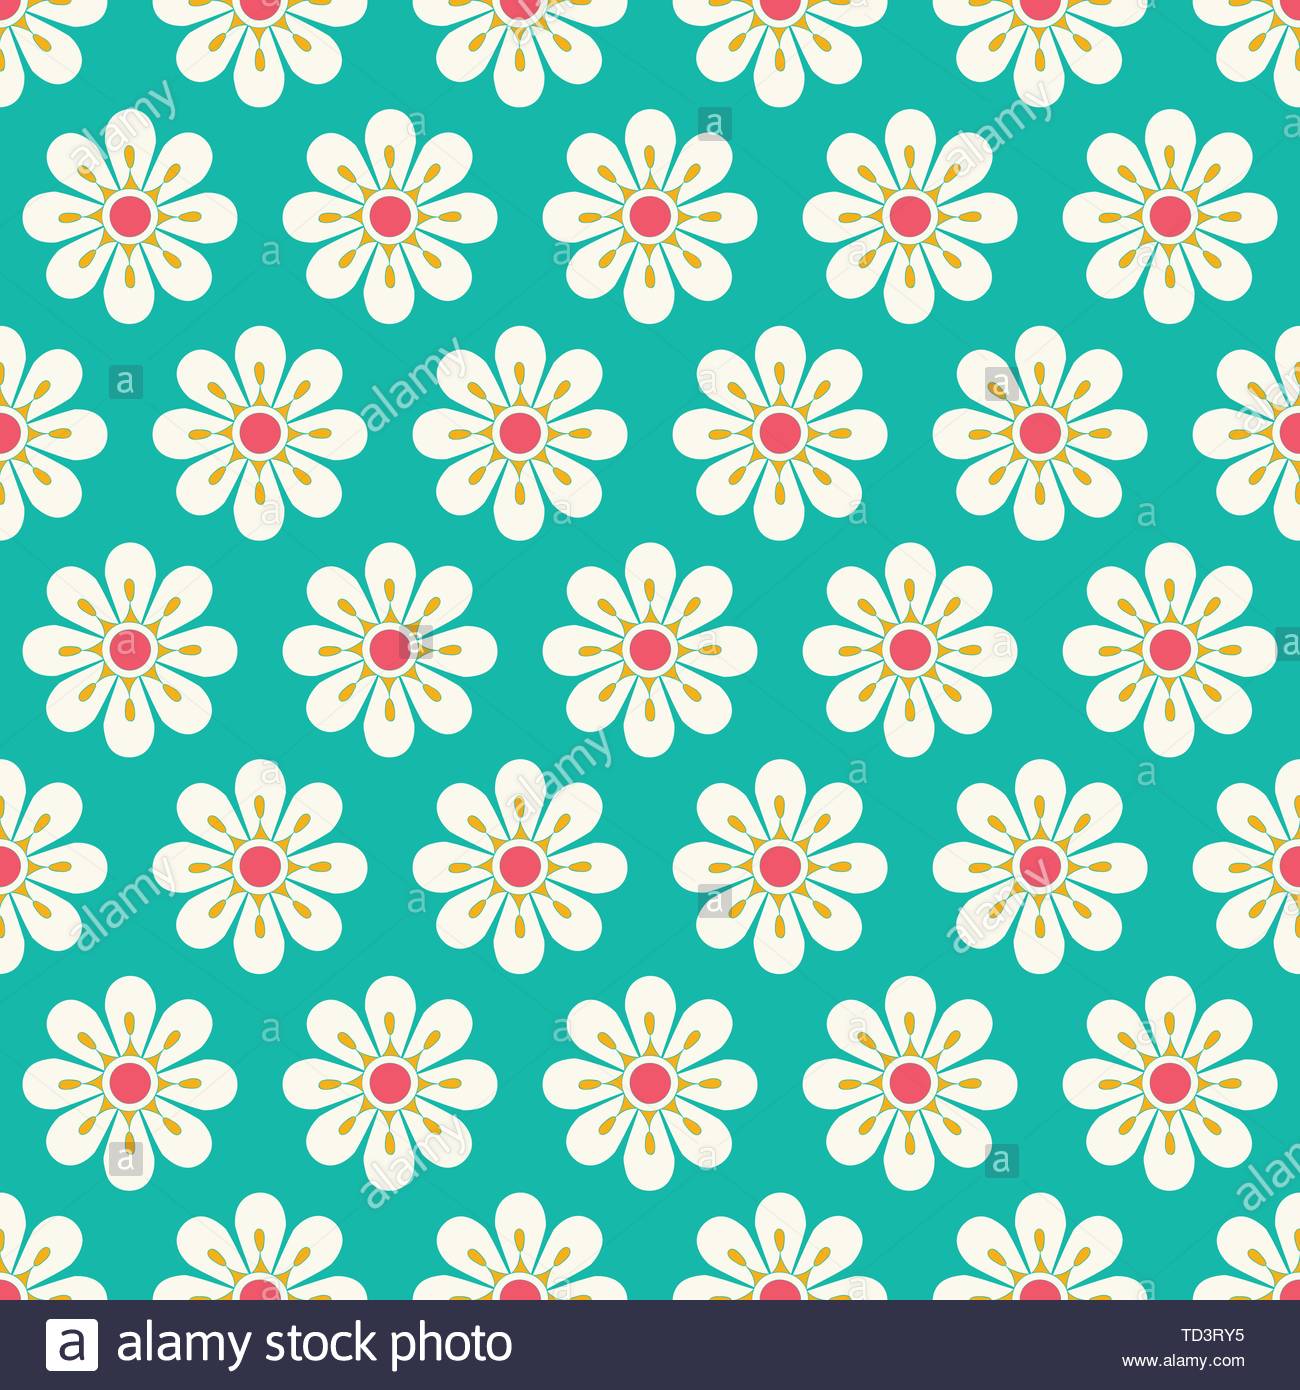 Stylized Daisy Flowers On A Green Background Seamless Pattern